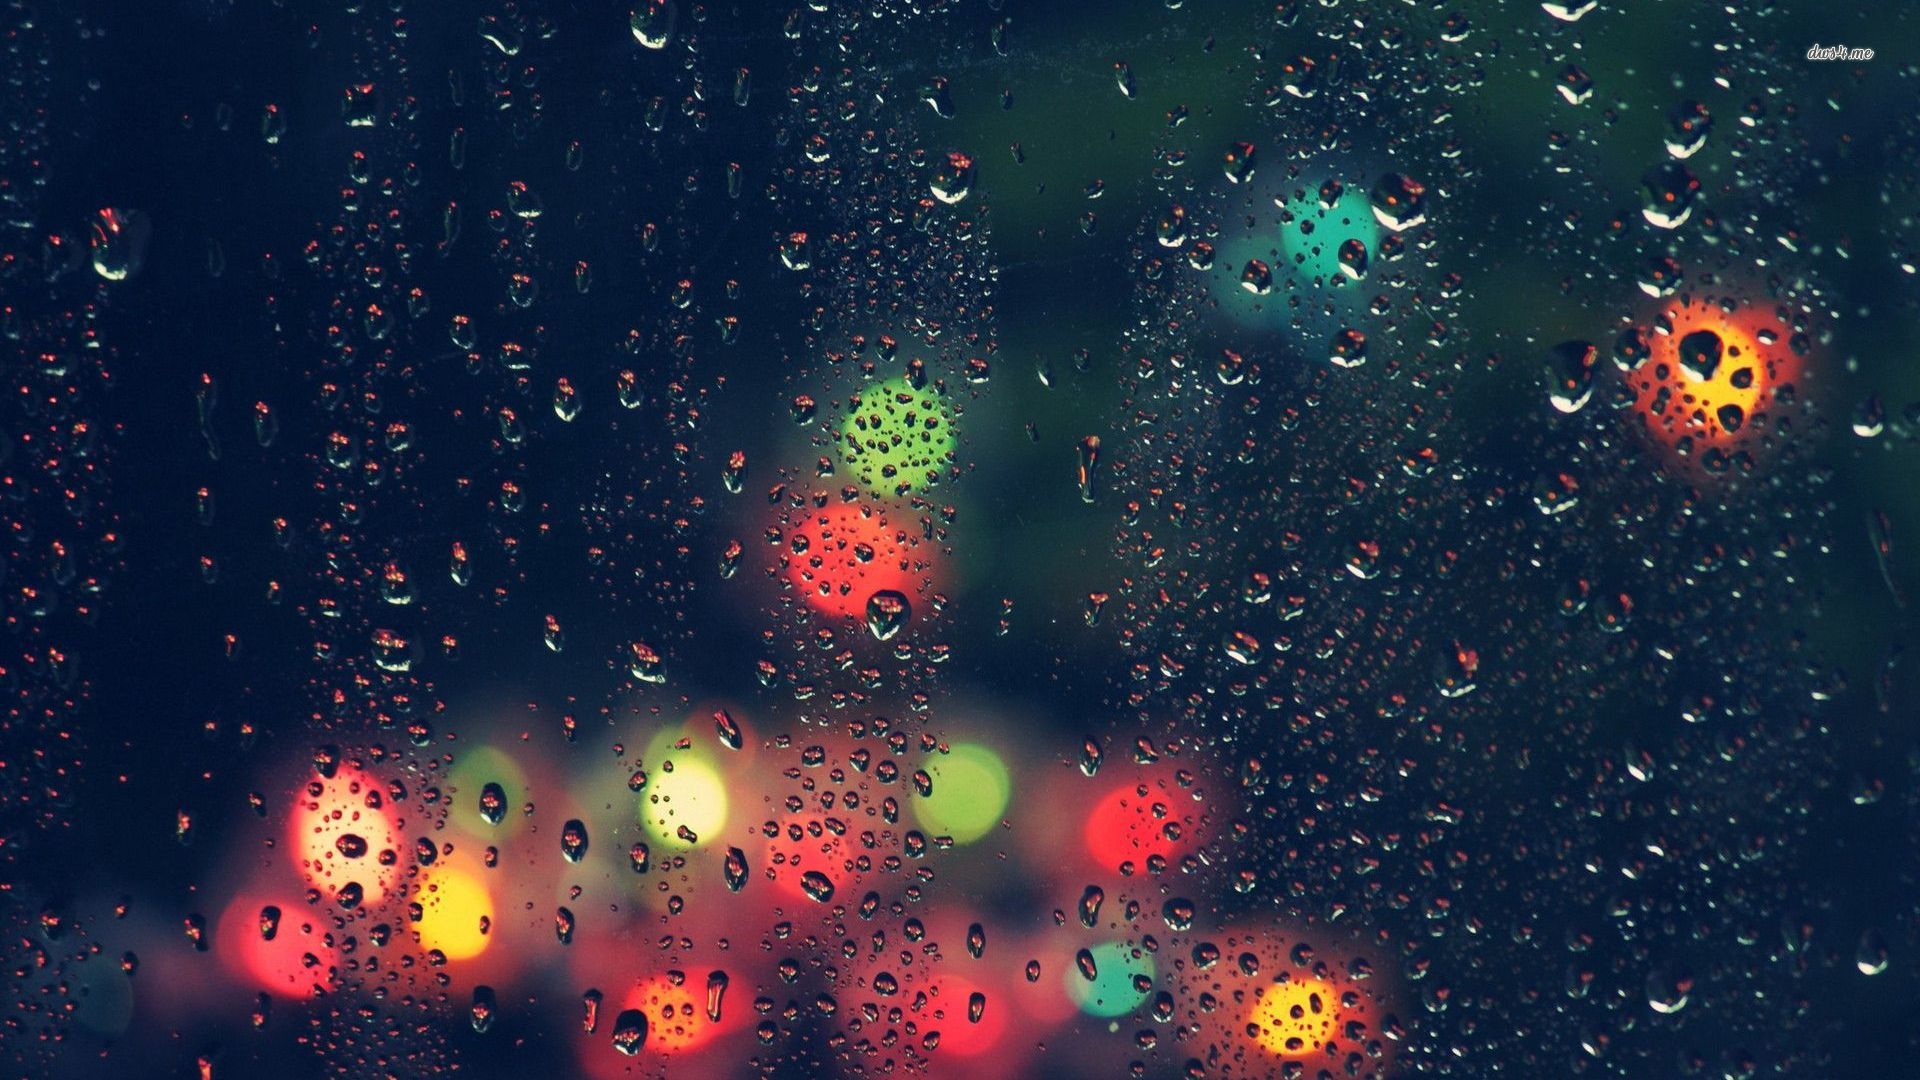 Beyond The Rainy Window Wallpaper Photography